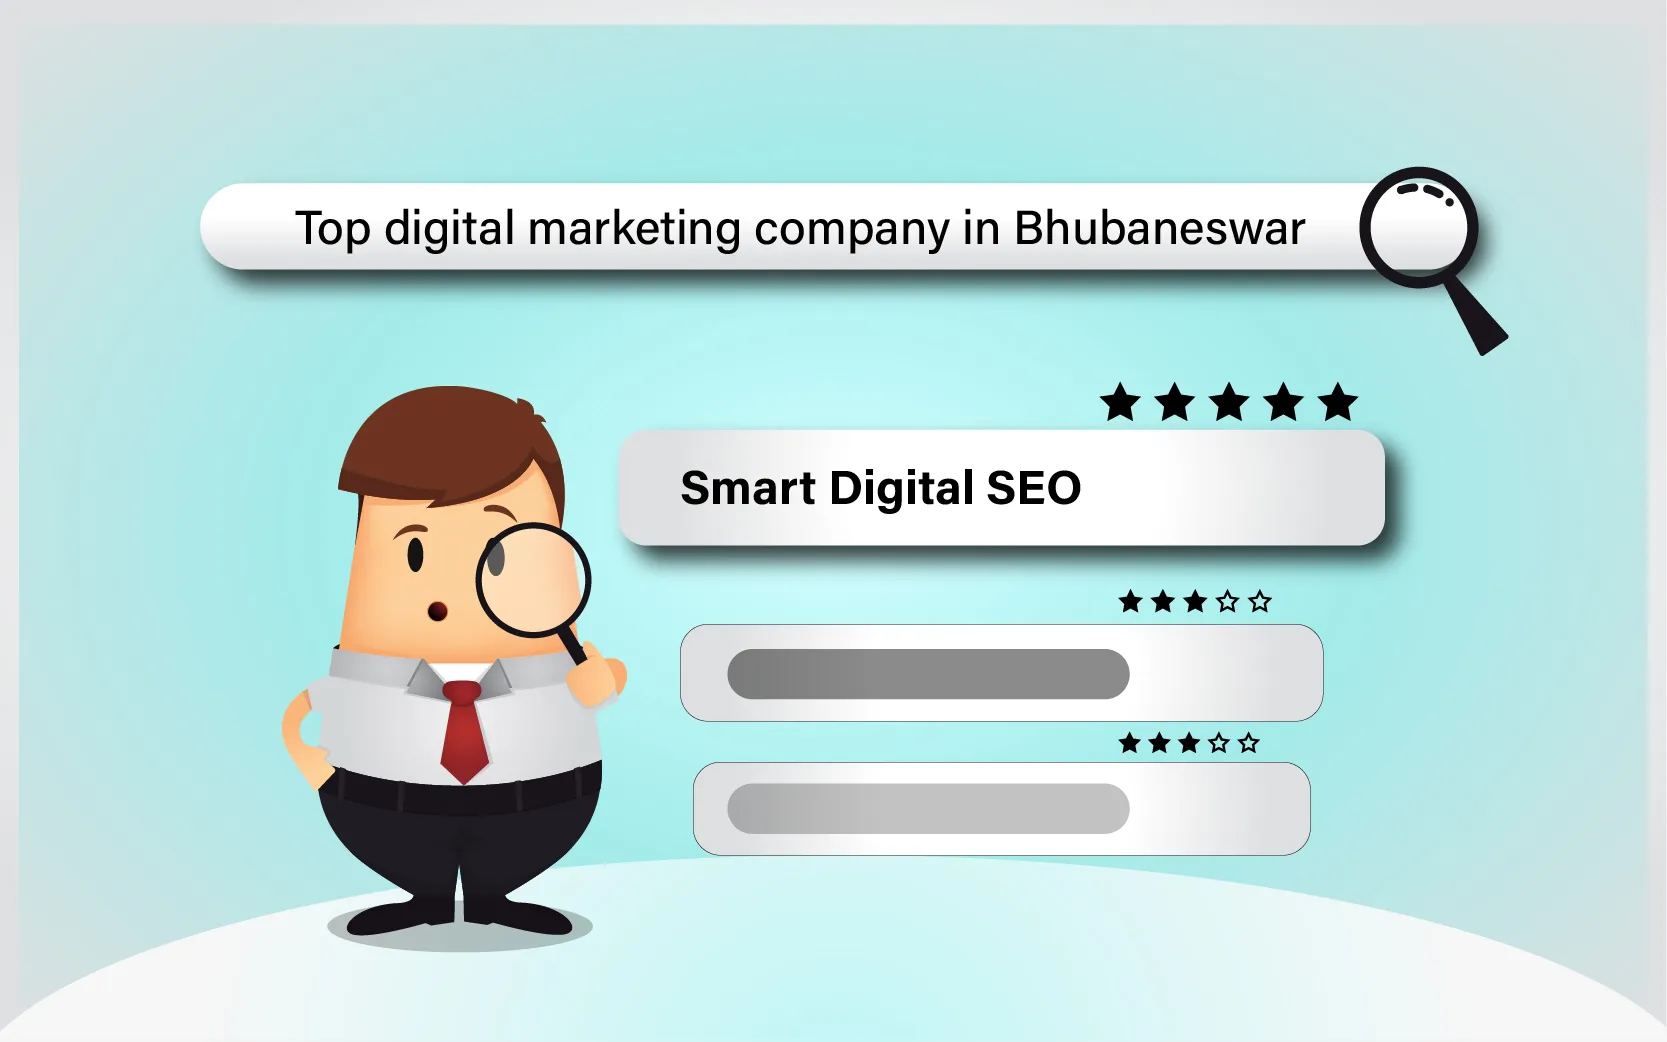 Smartdigitalseo: Top digital marketing company in Bhubaneswar | smartdigitalseo blog